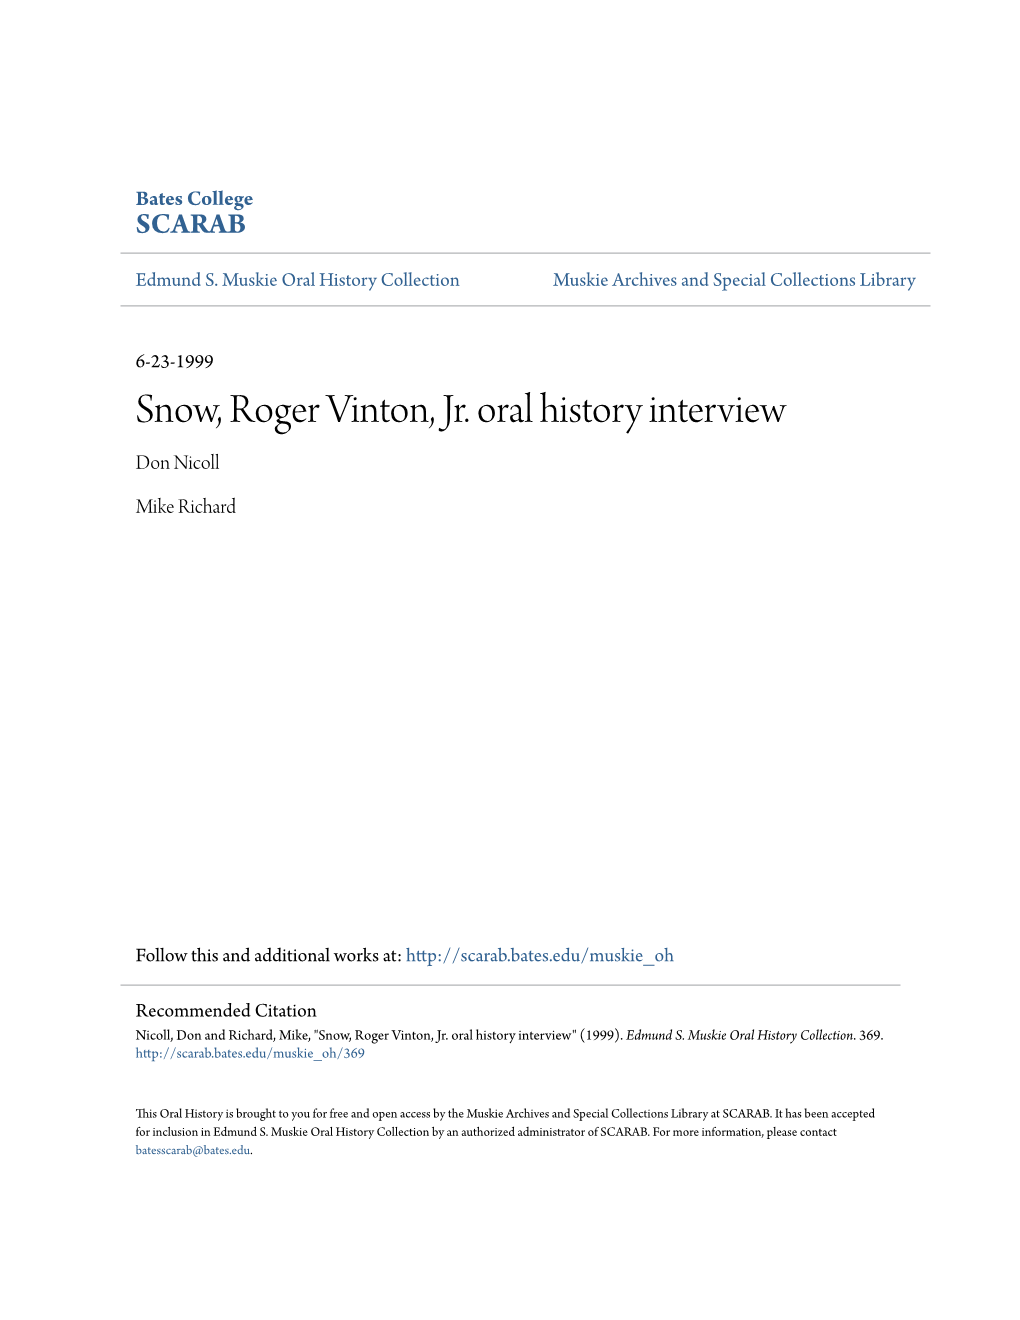 Snow, Roger Vinton, Jr. Oral History Interview Don Nicoll